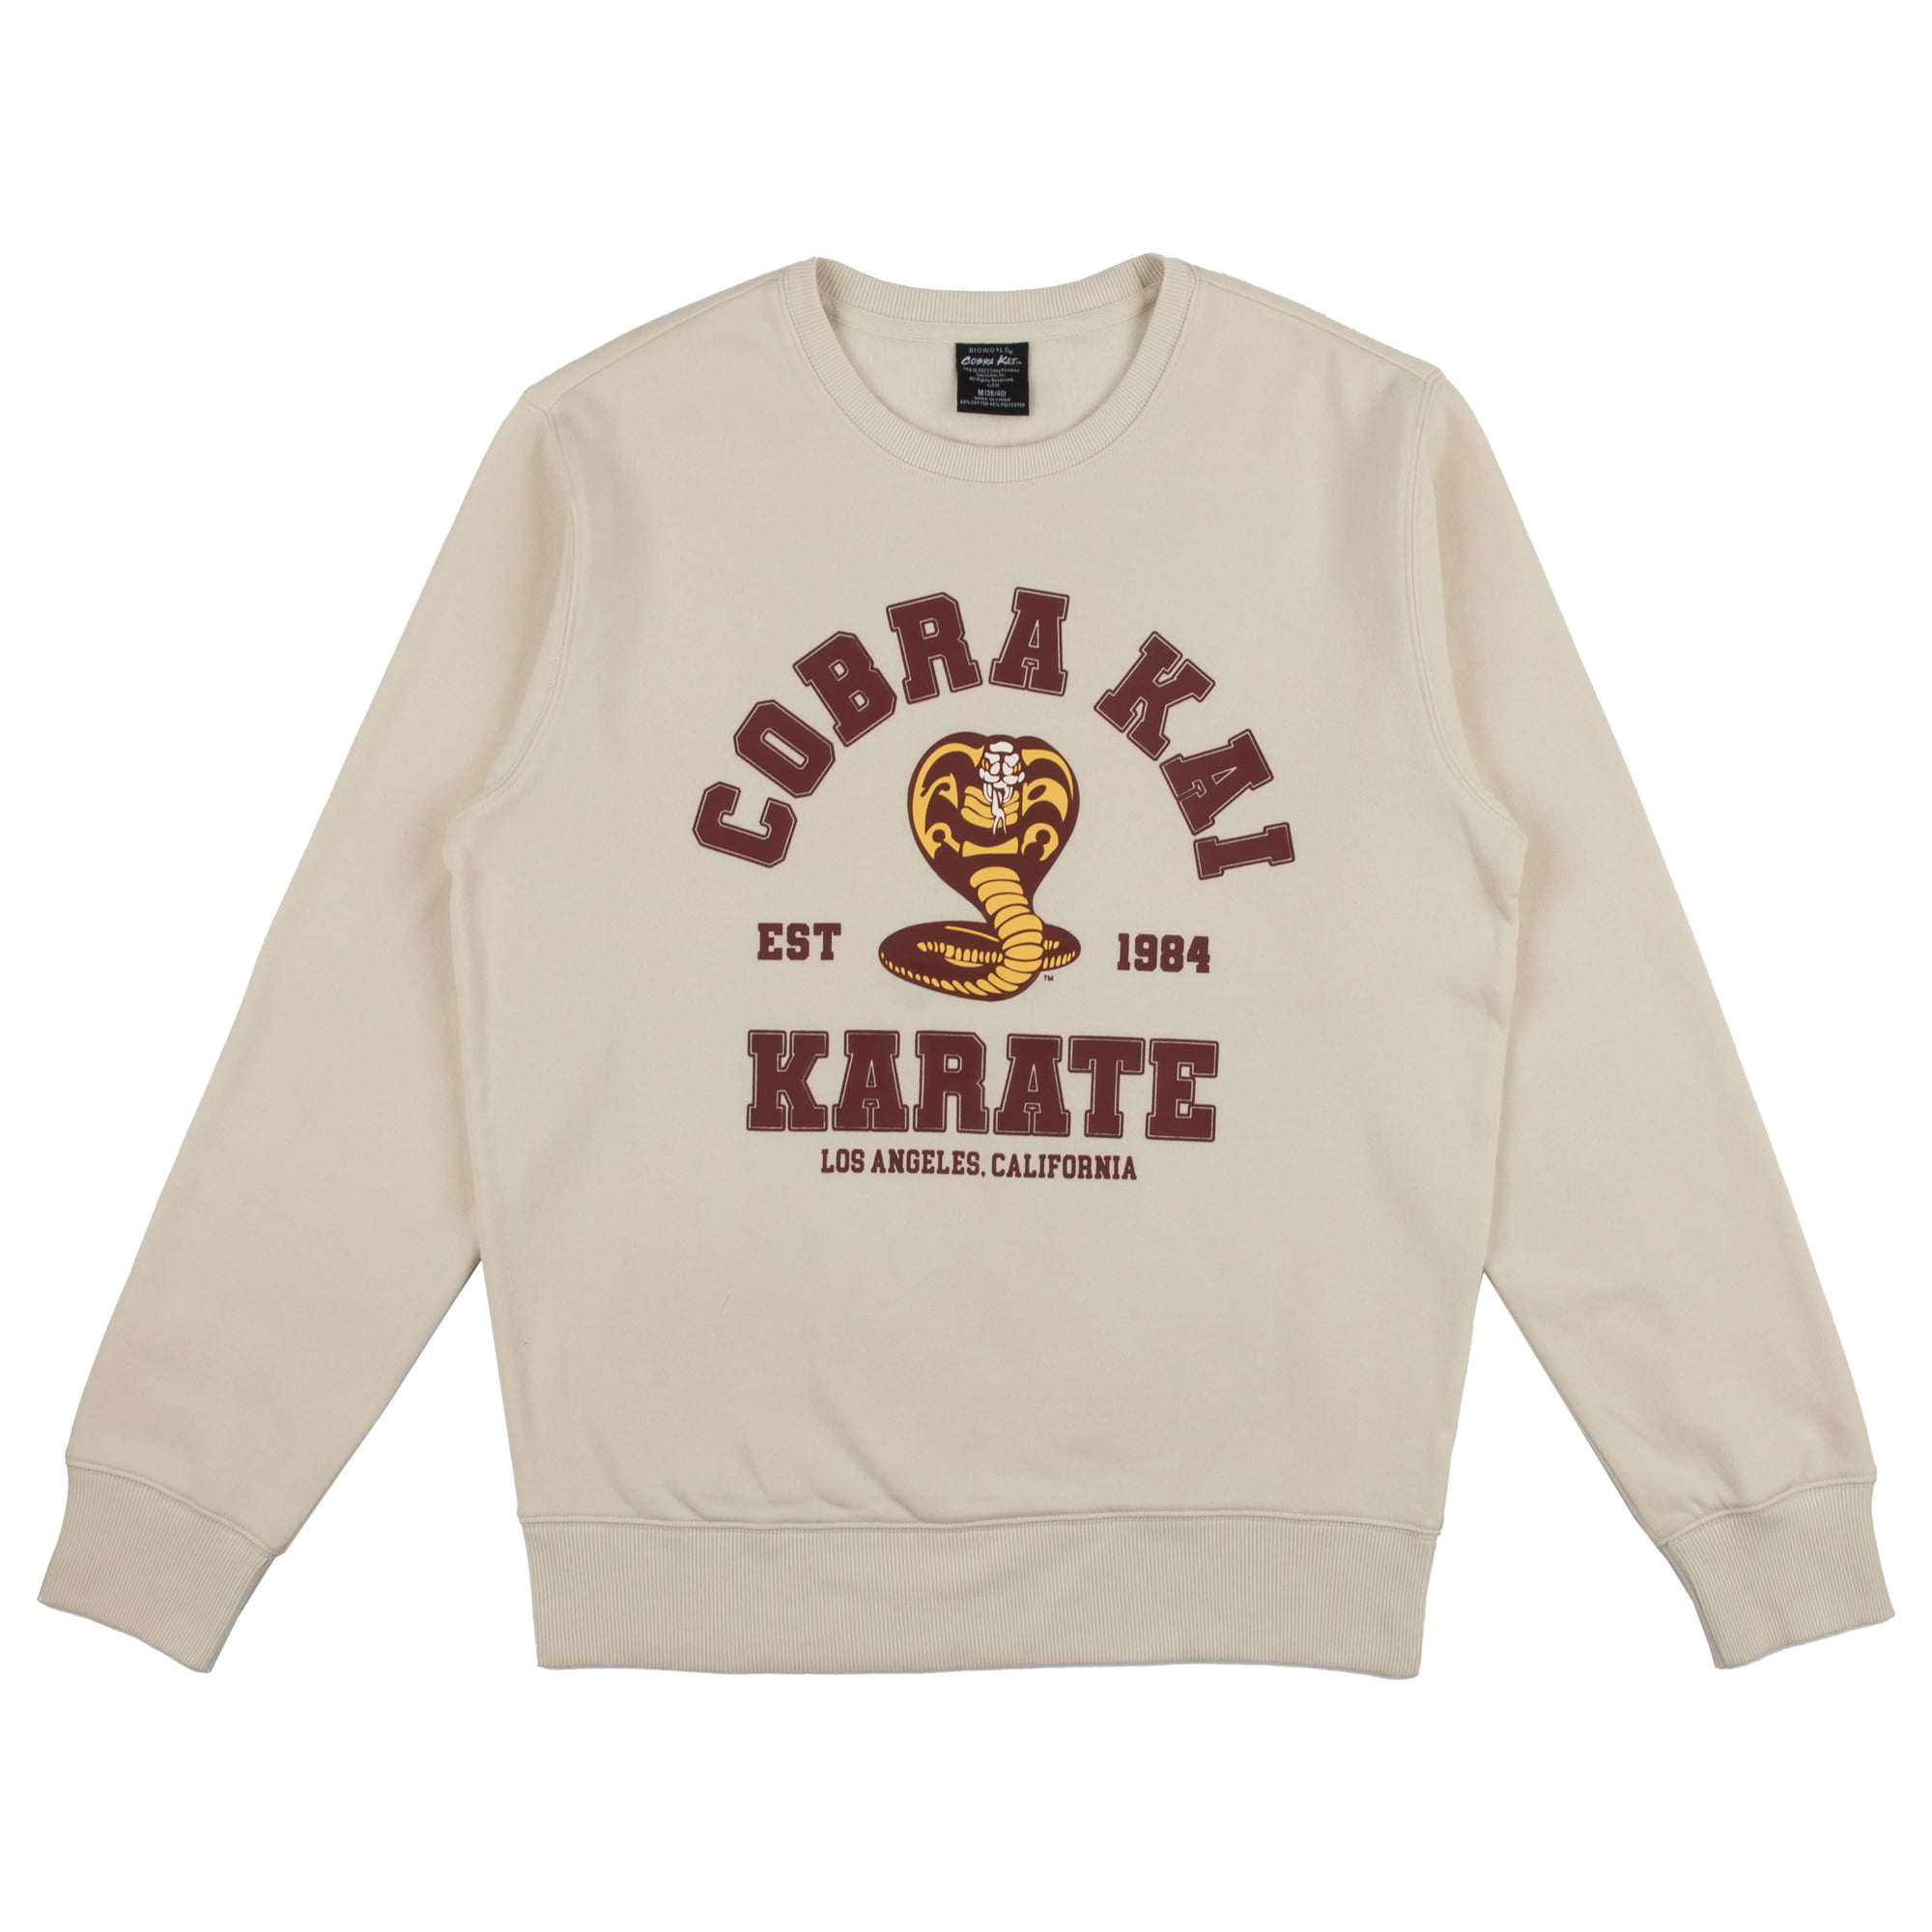 Cobra Kai Men's Fleece Graphic Print Sweatshirt, Sizes S-3XL